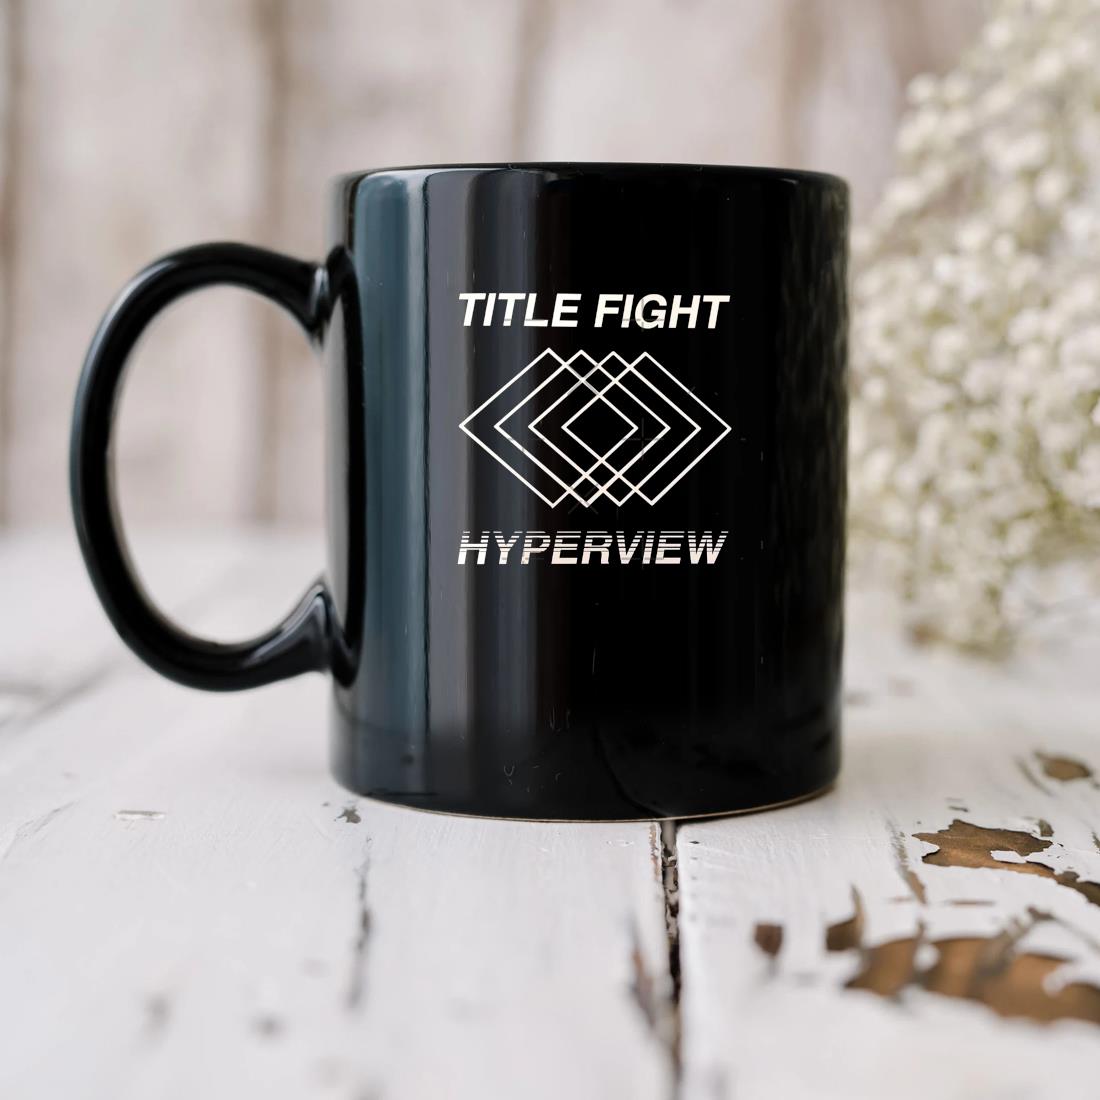 Title Fight Hyperview Mug biu